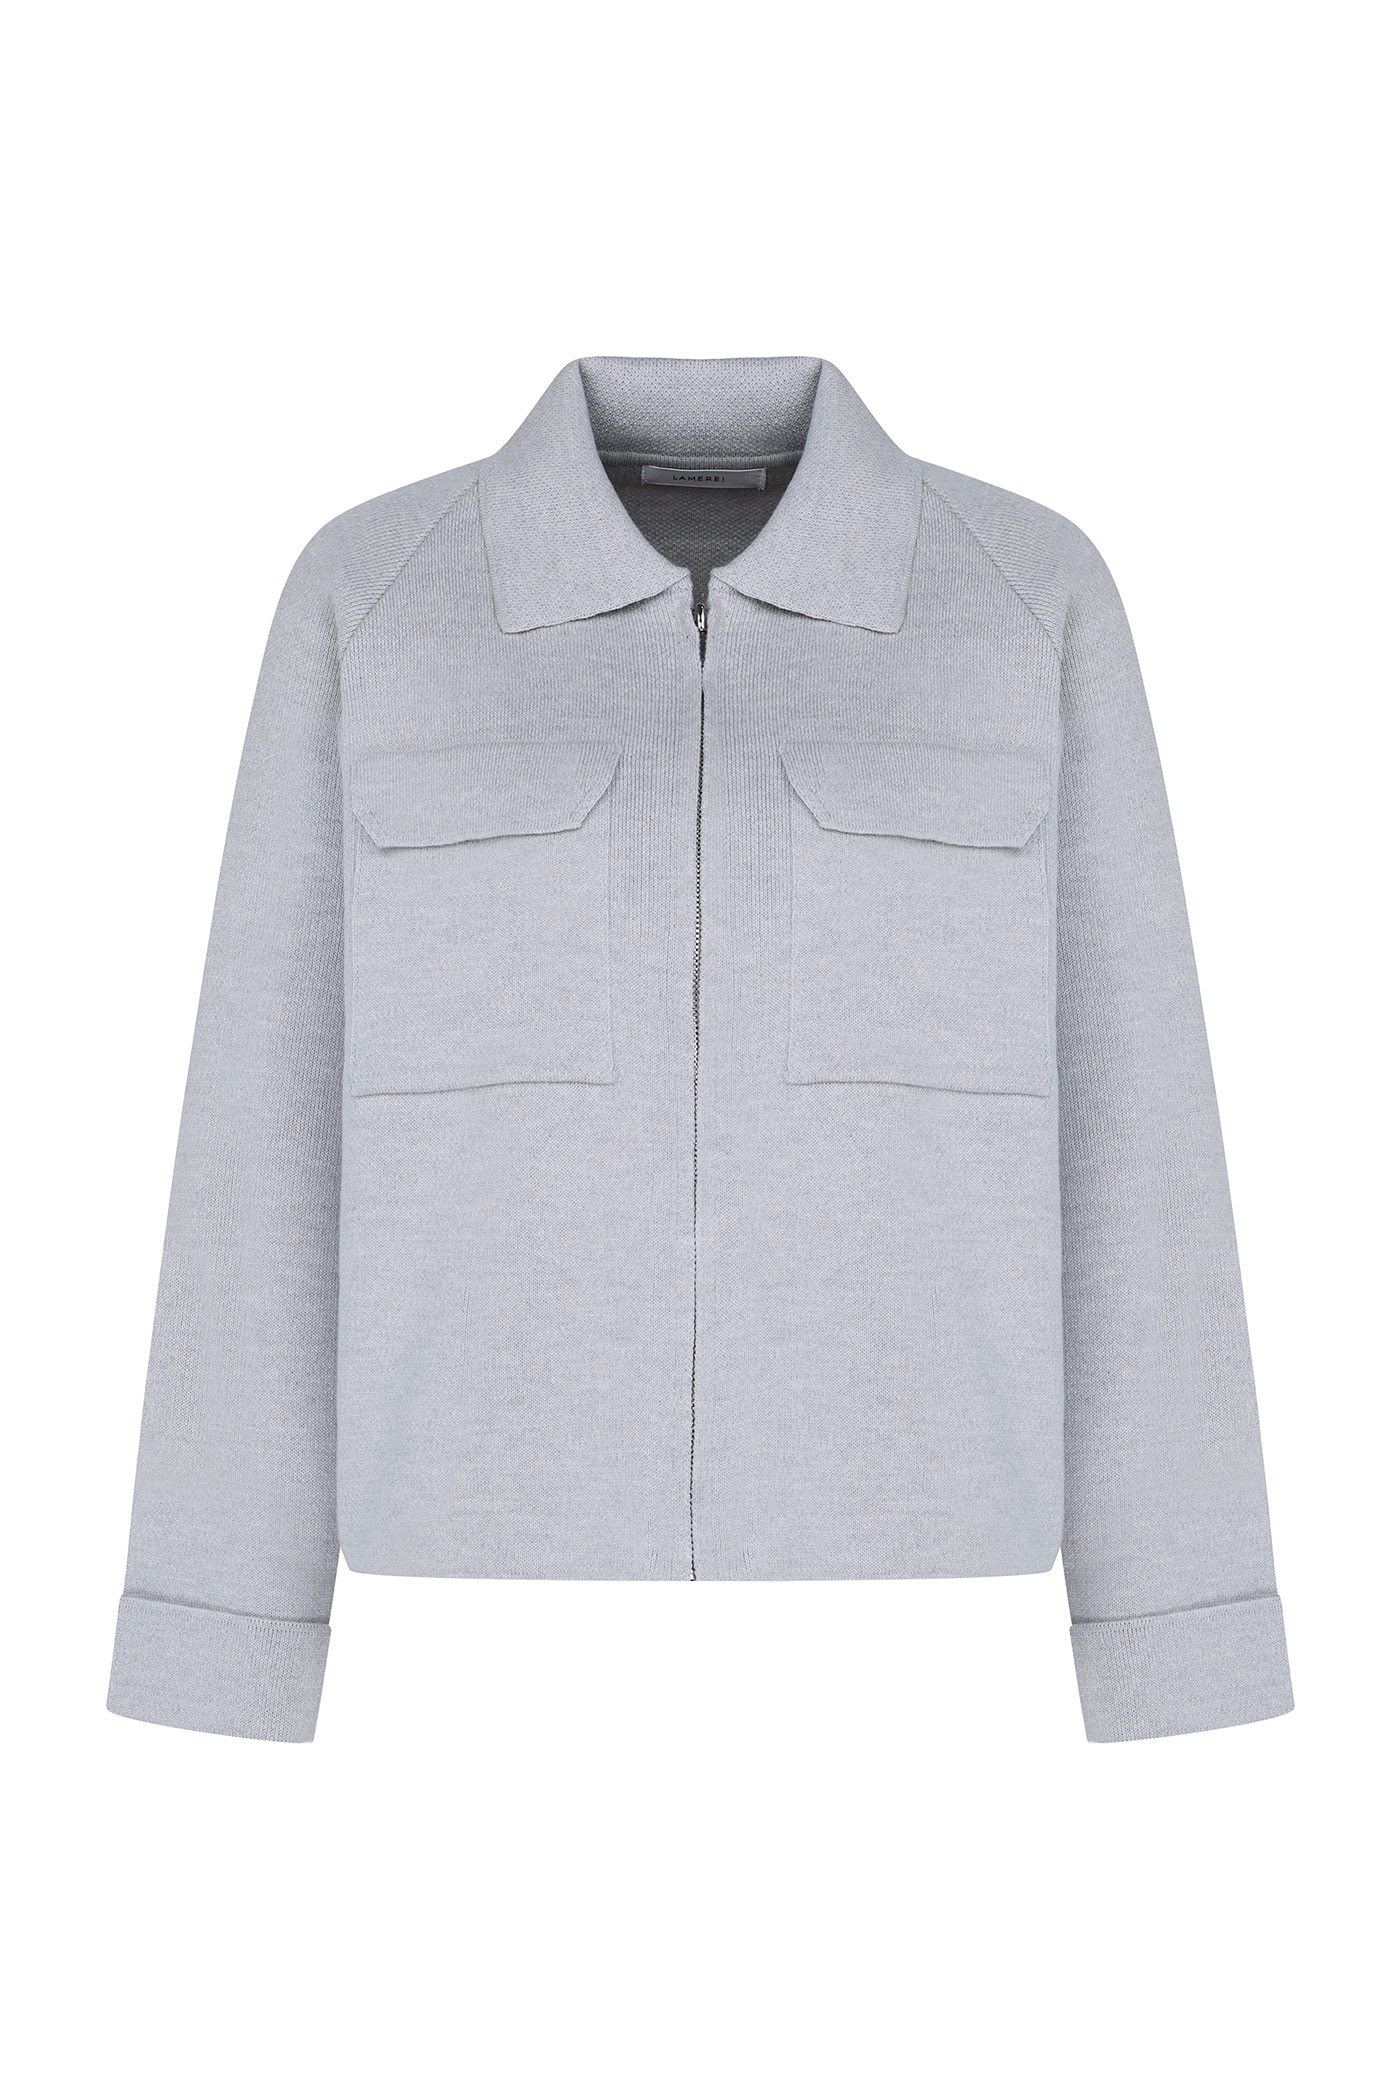 [SAMPLE]Cotton Zip-Up Jacket-Mel Gray